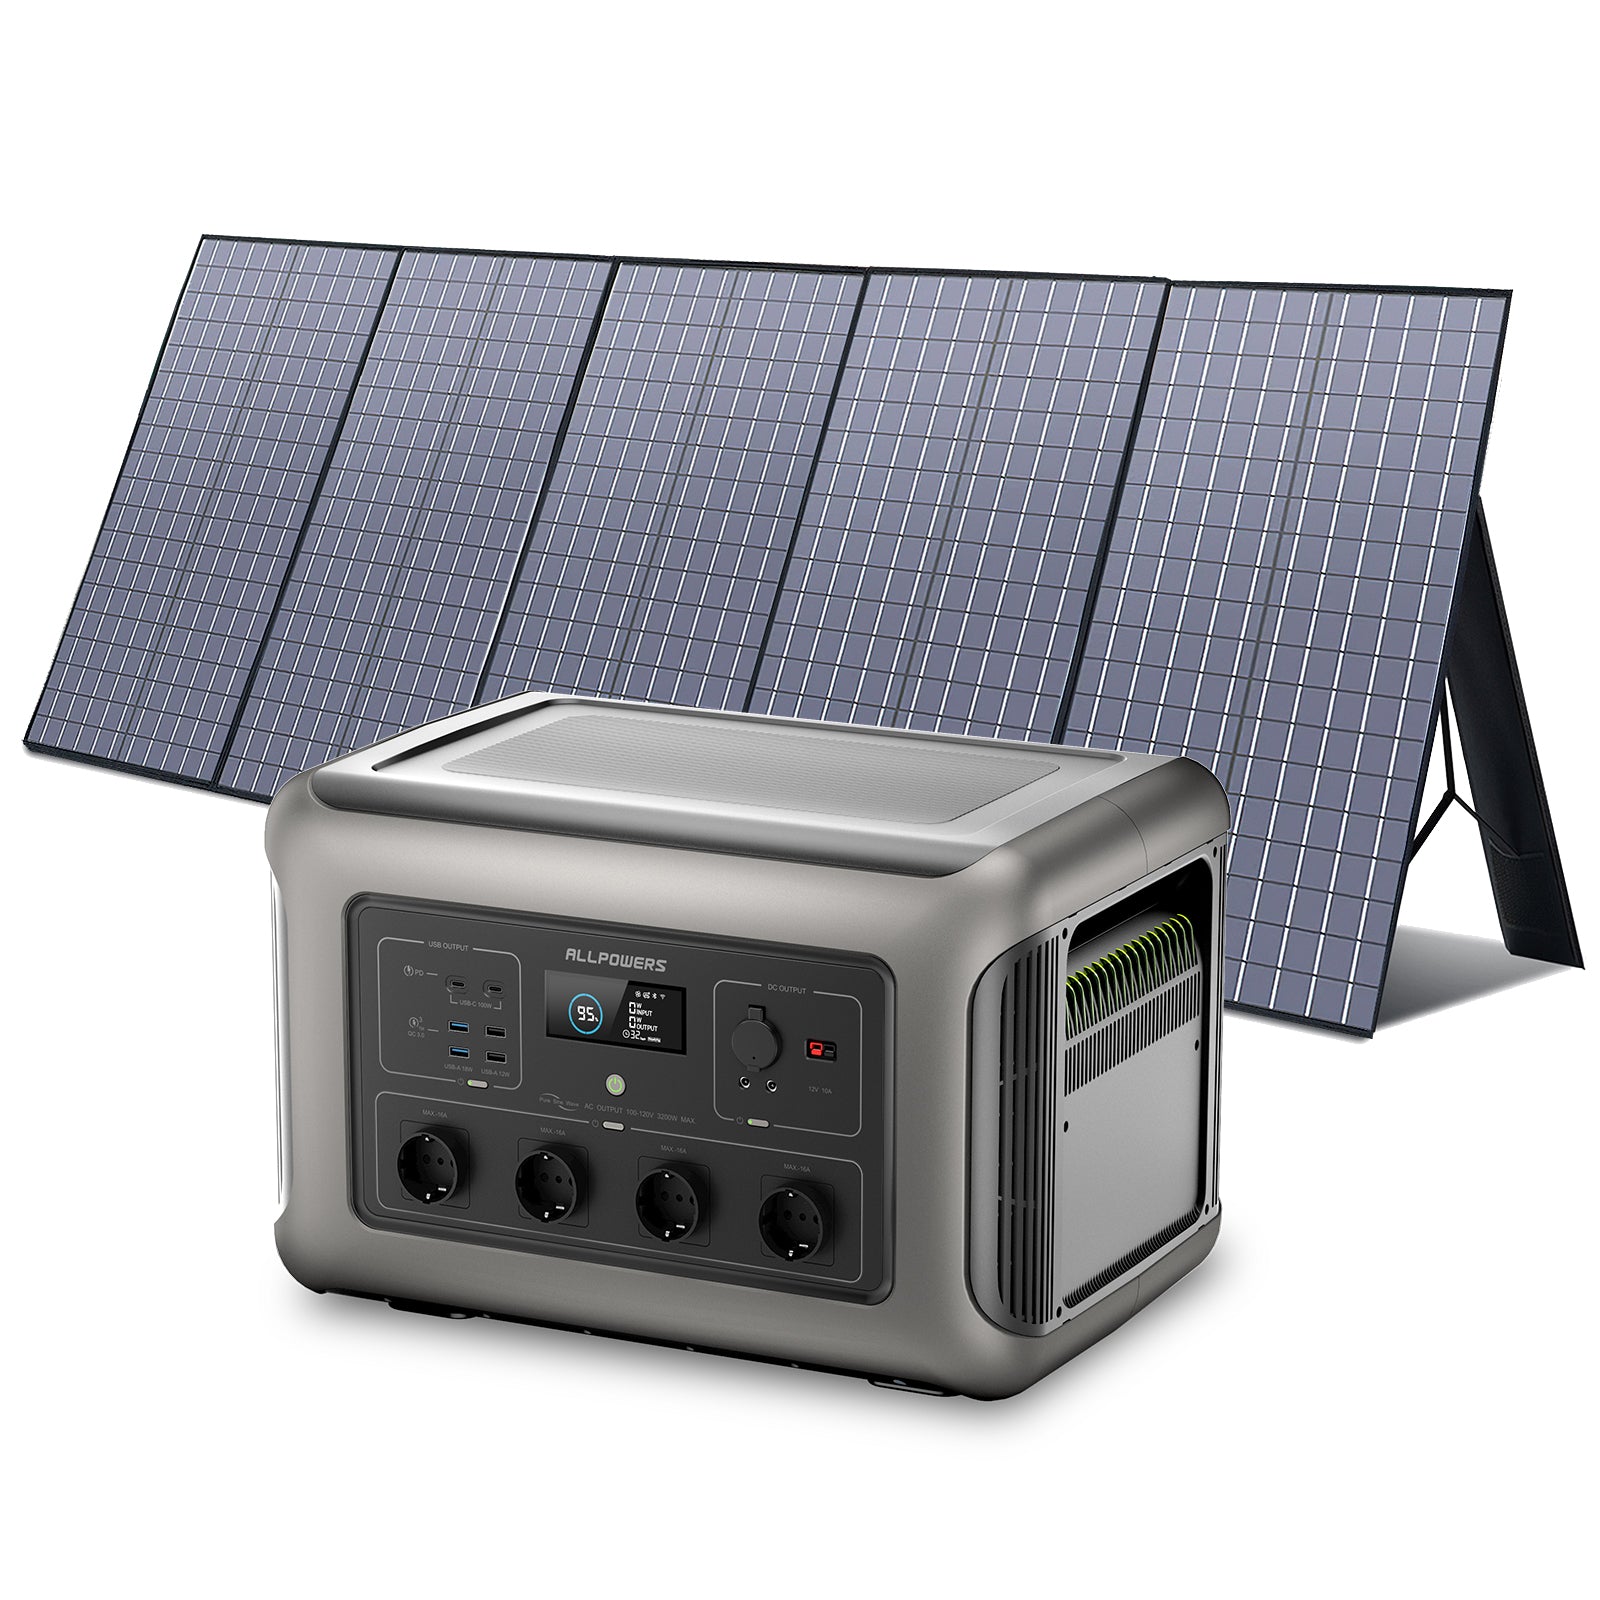 ALLPOWERS Solar Generator Kit 3500W (R3500 + SP037 600W Solar Panel) 